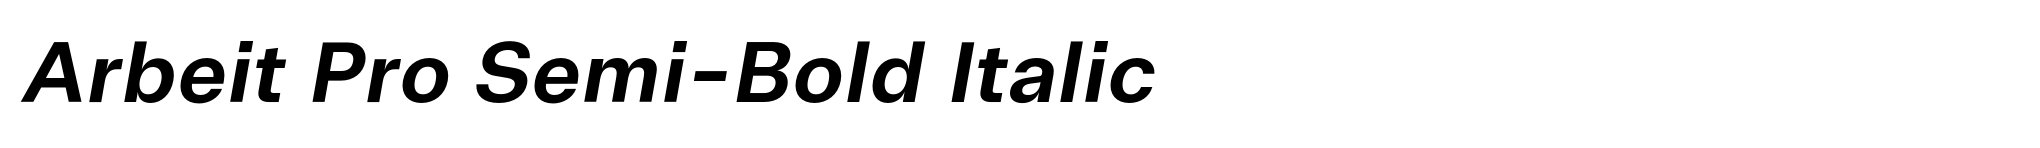 Arbeit Pro Semi-Bold Italic image